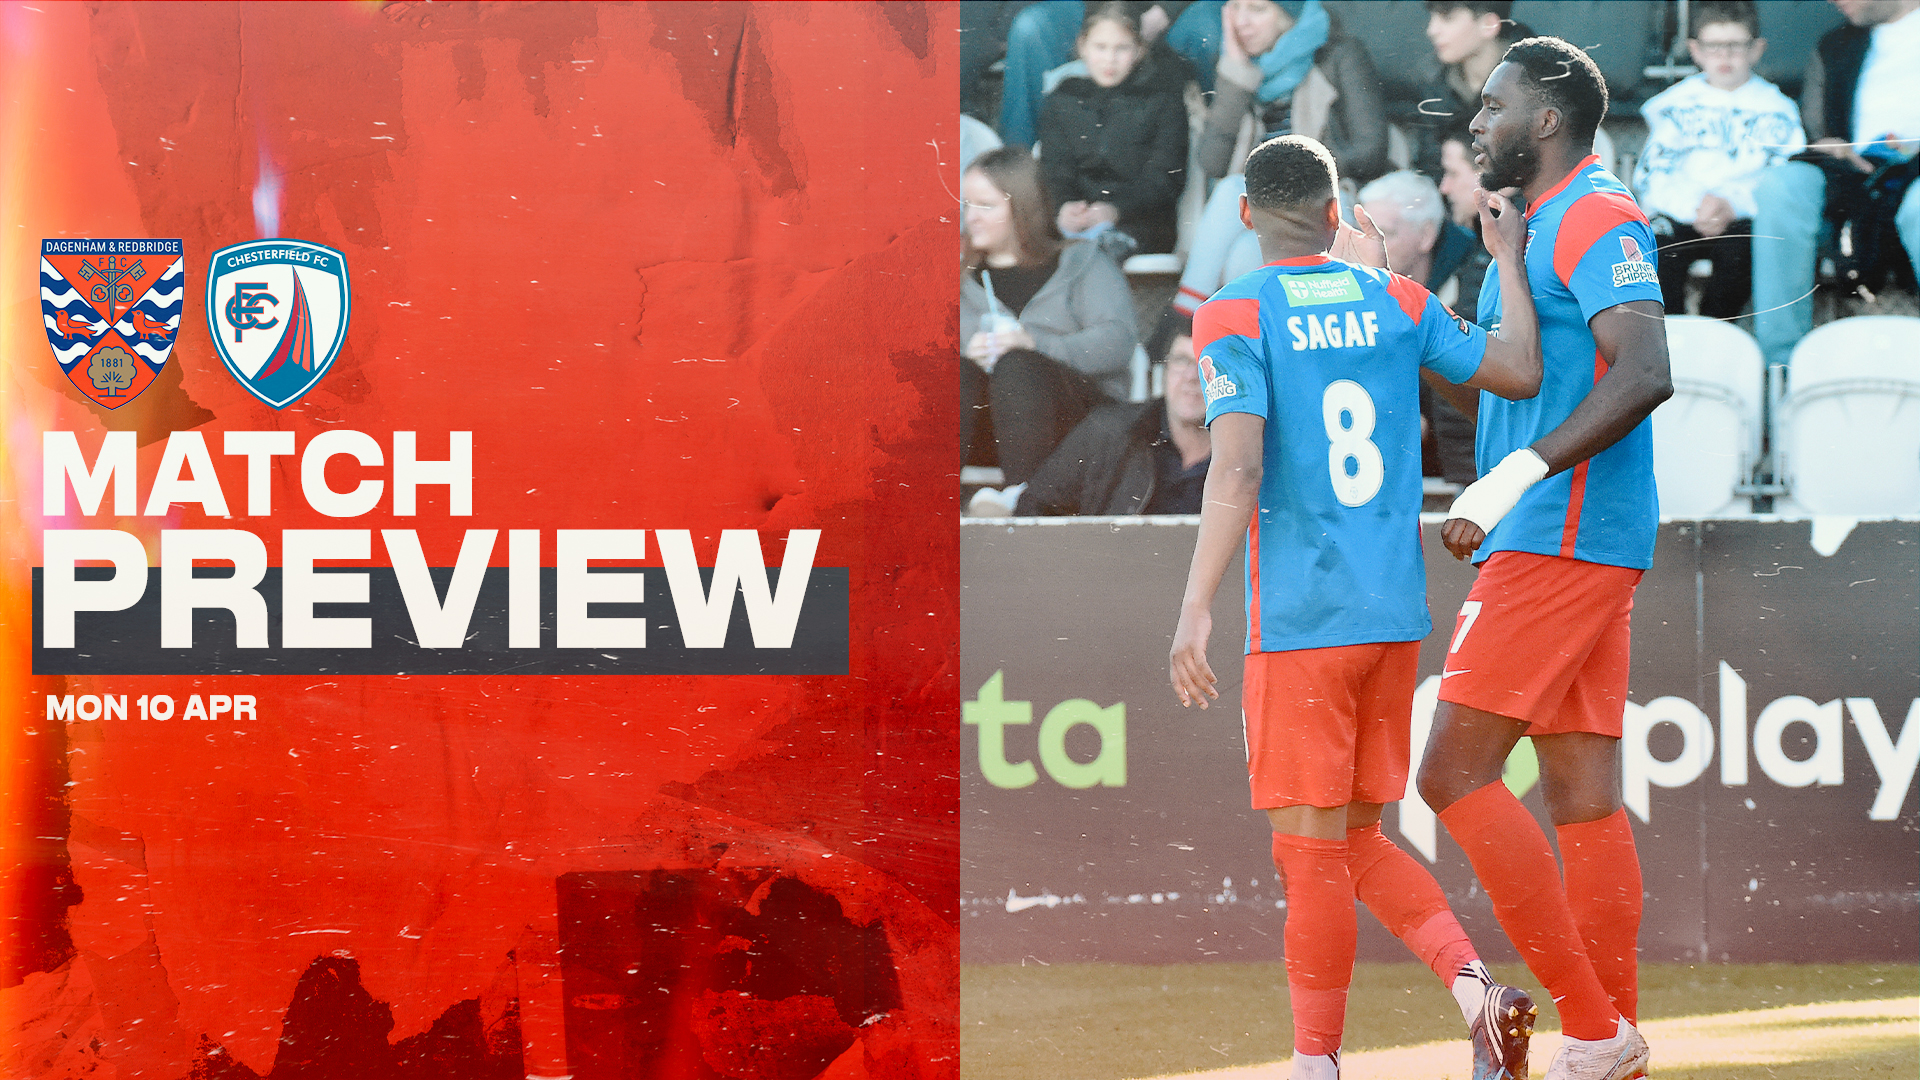 Match Preview: Altrincham v Southend United